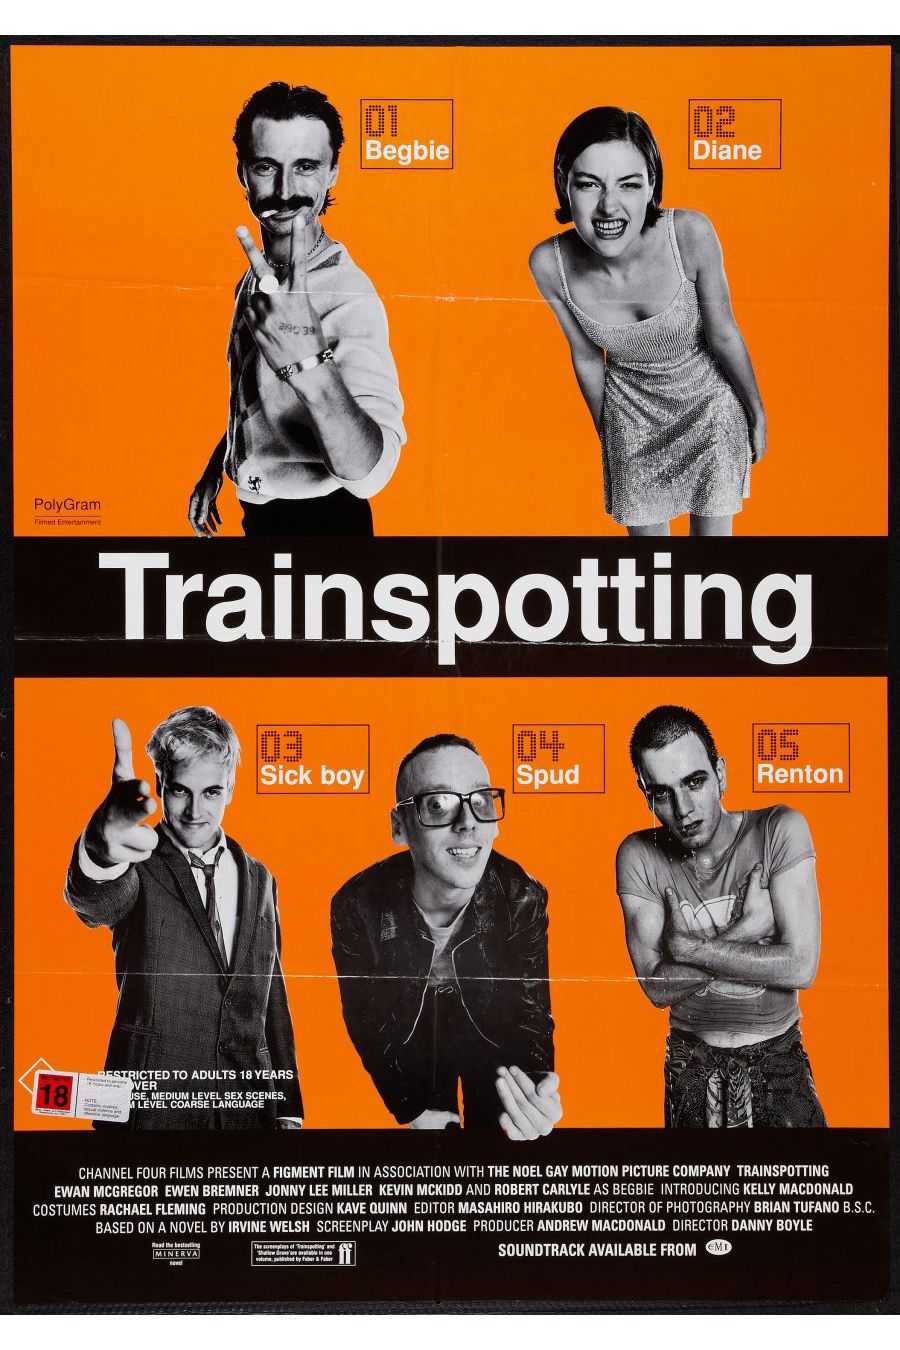 Trainspotting (Danny Boyle, 1996)